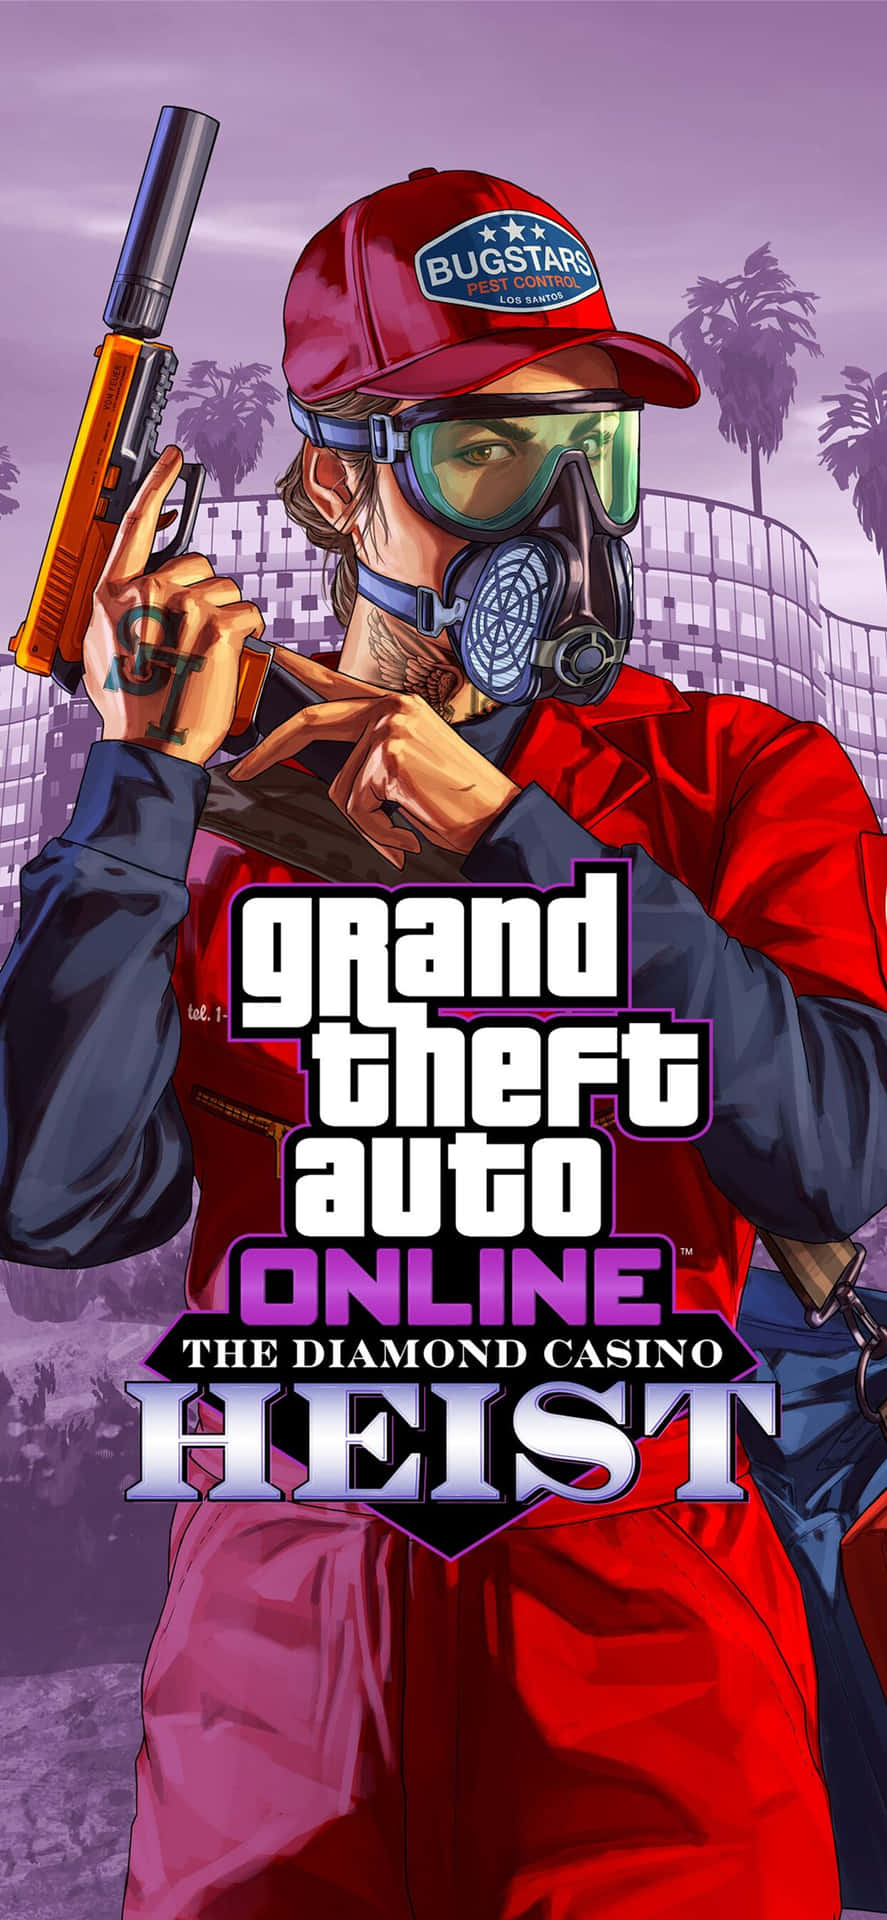 Iphonexs Max Bakgrundsbild För Grand Theft Auto V The Diamond Casino Heist.